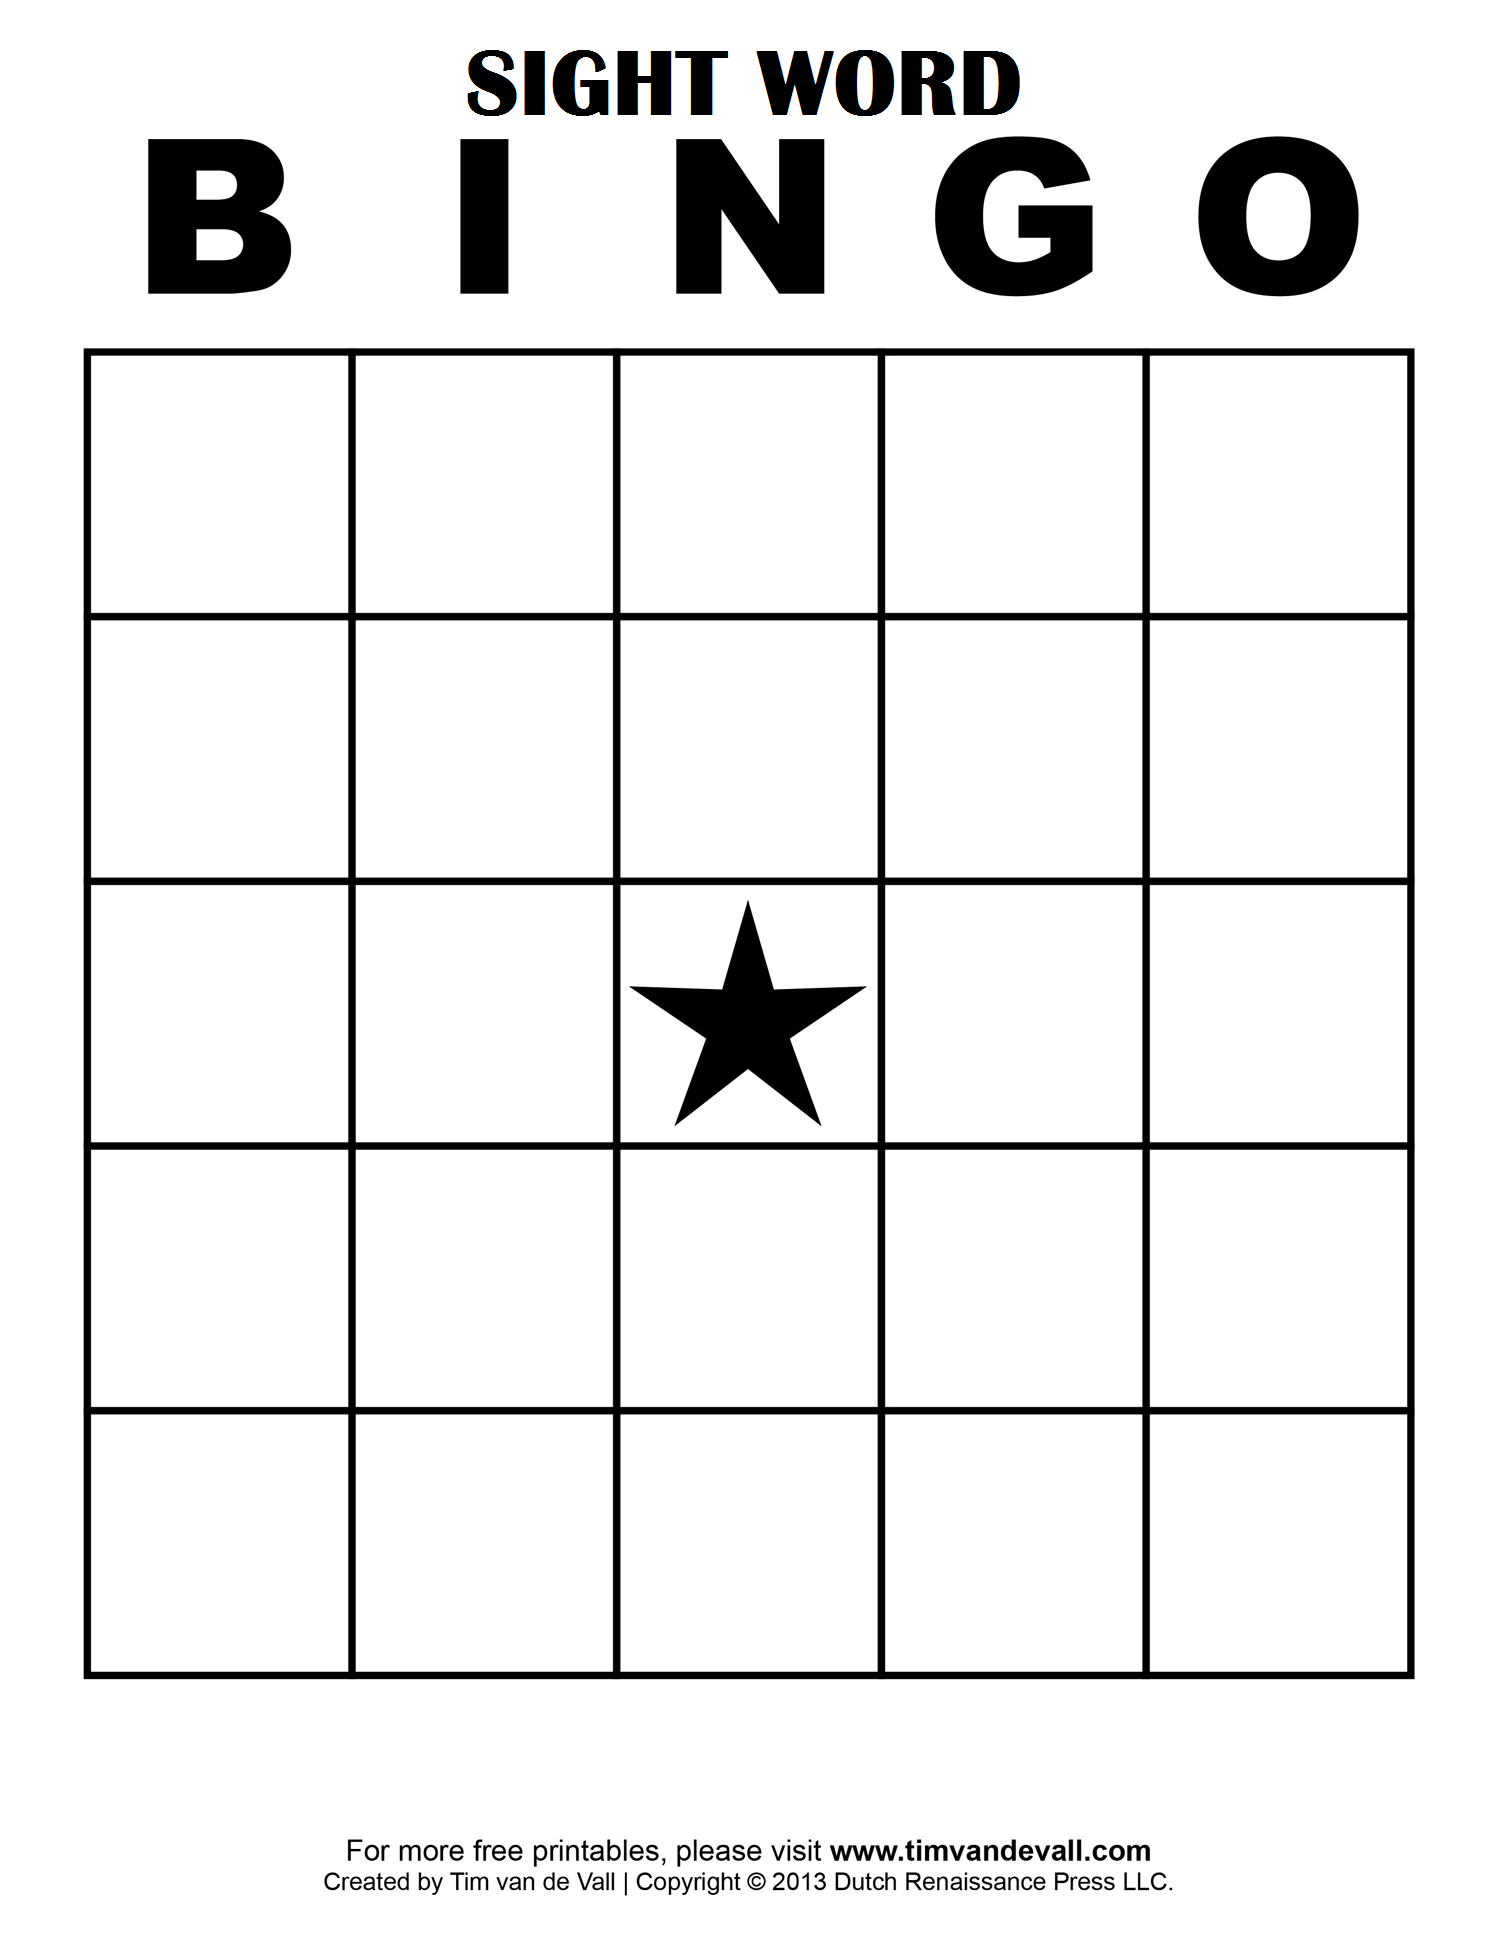 bingo-generator-free-printable-free-printable